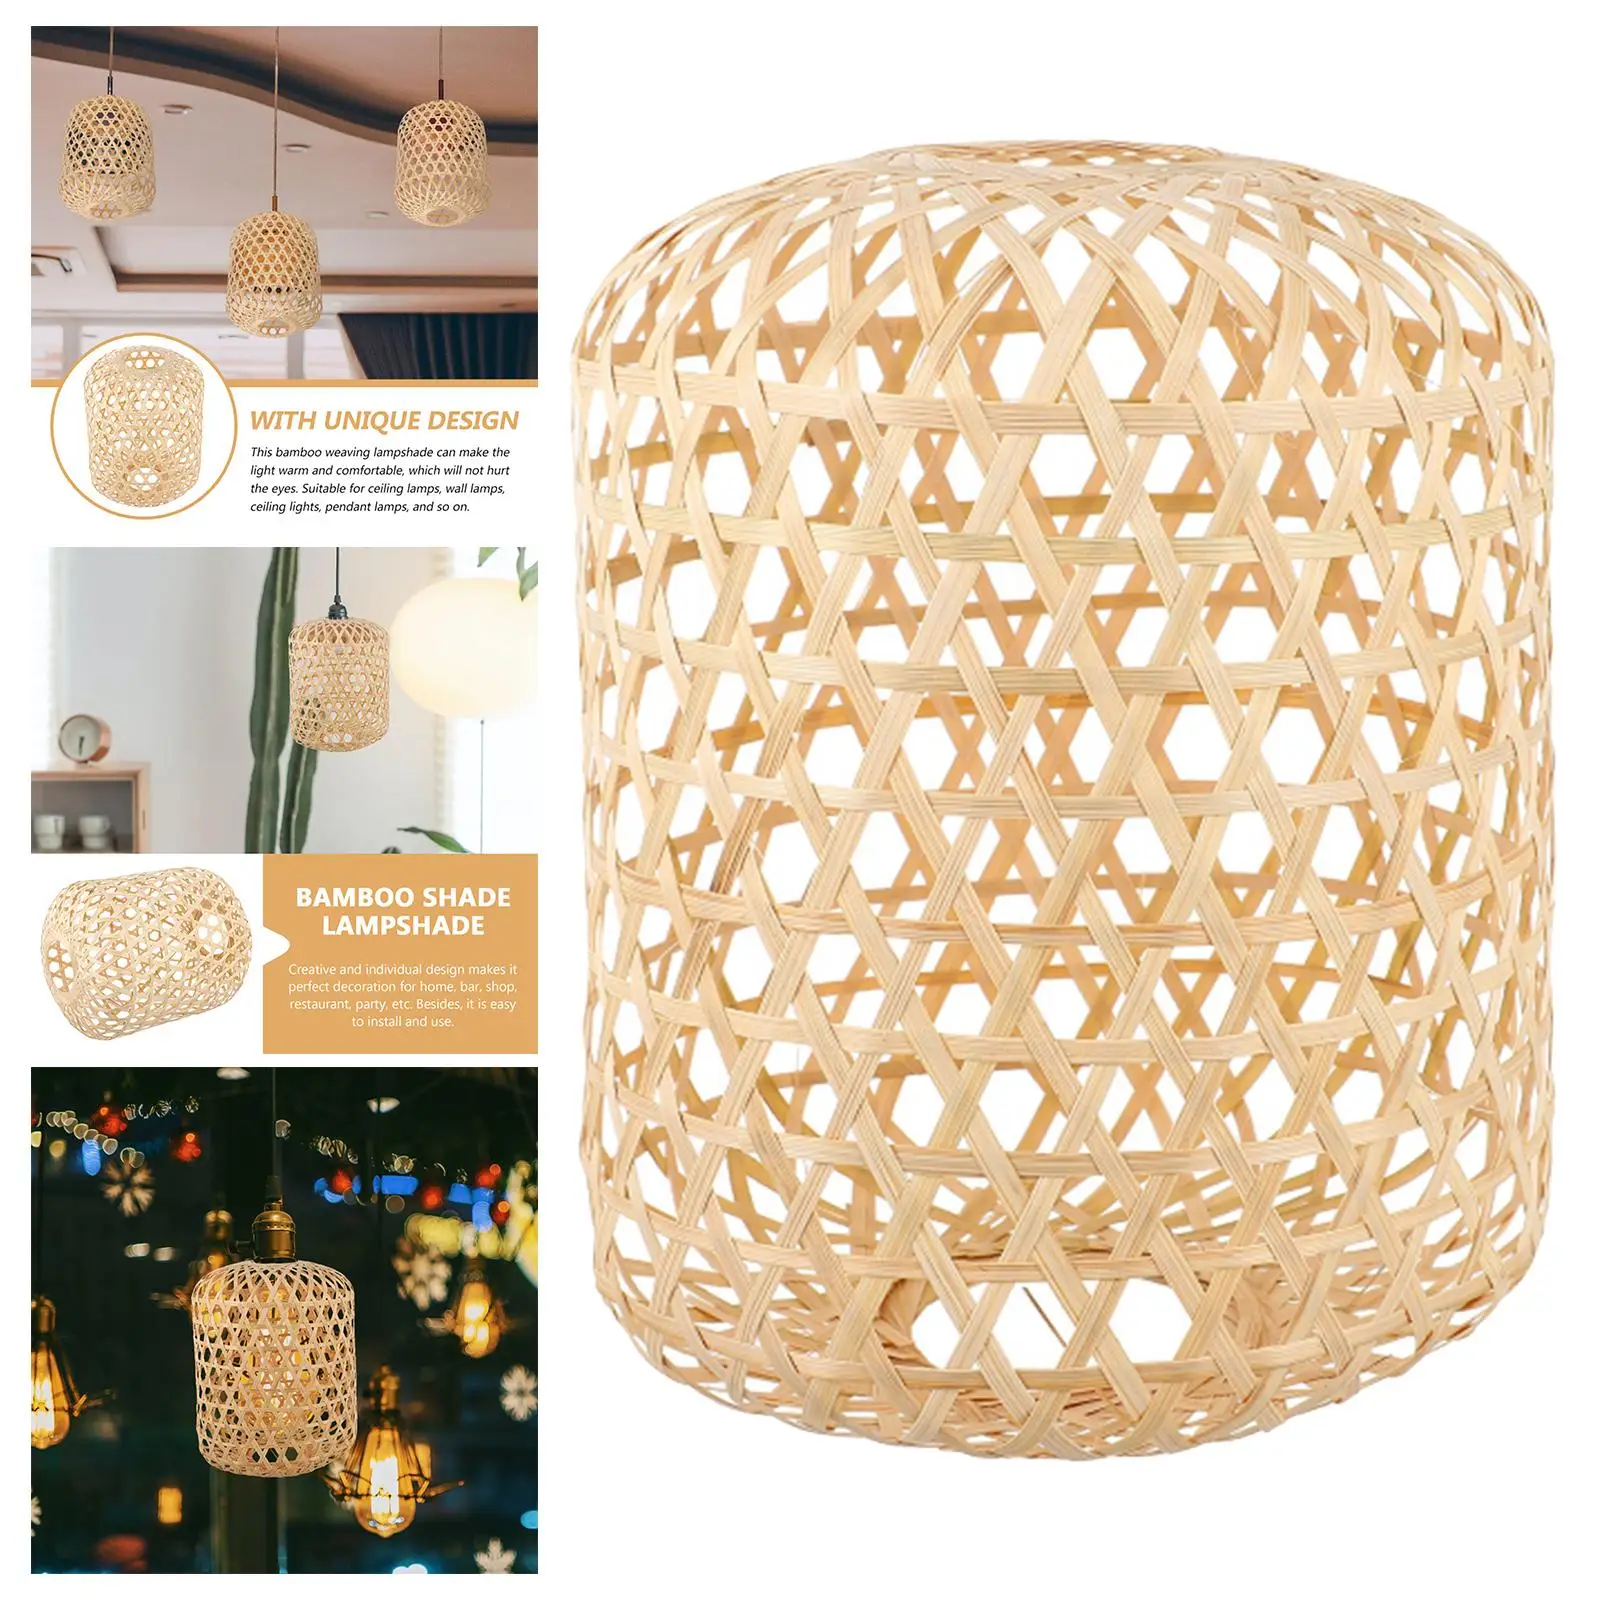 Pendant Light Shade Weave Lantern Vintage Bulb Guard Rattan Basket Cover for Ceiling Fan Light Chandelier Teahouse Hotel Cafe